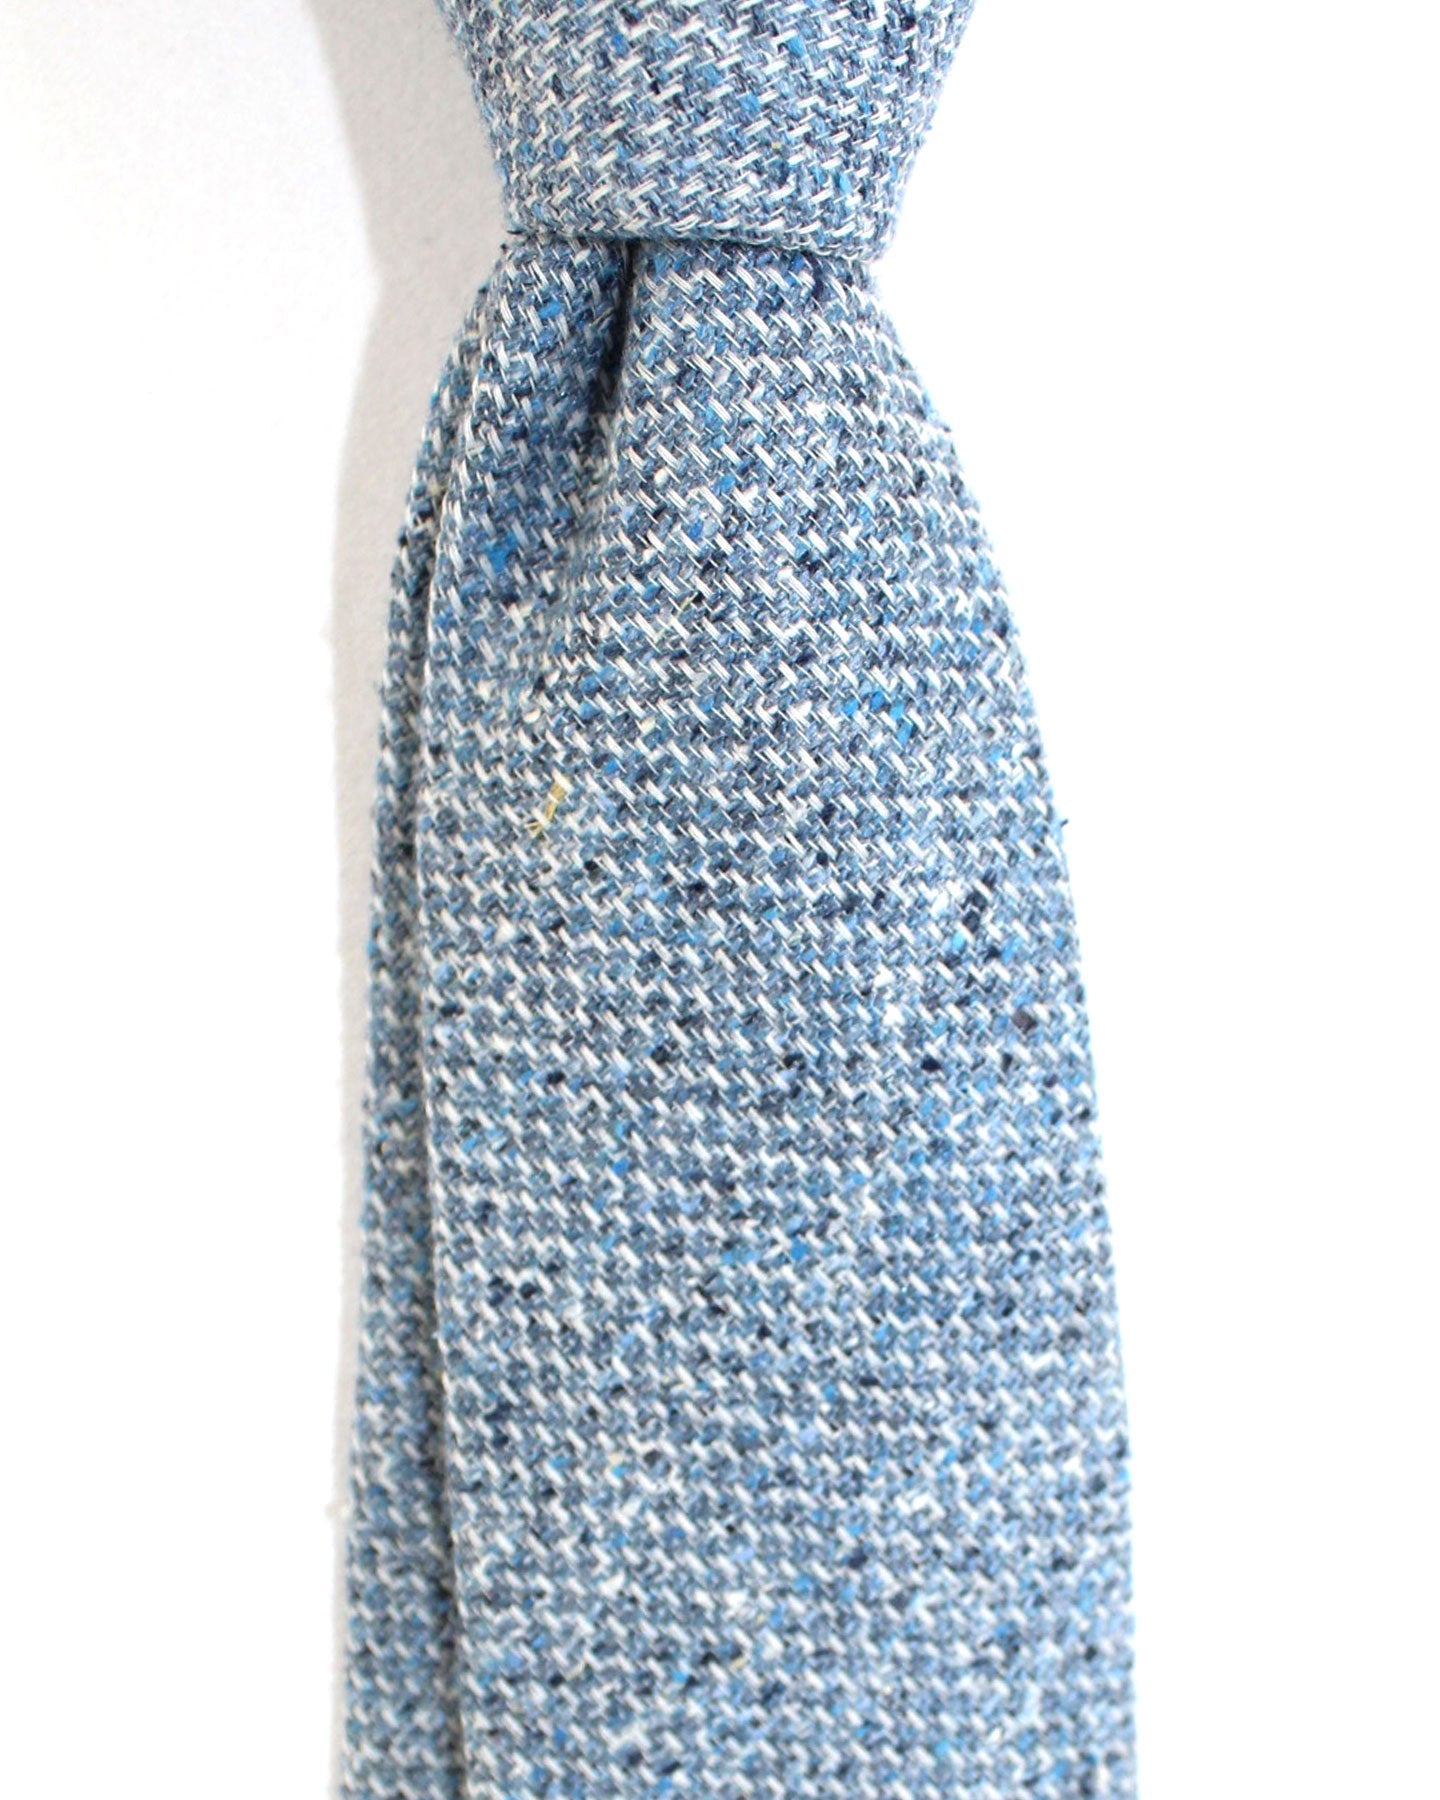 Ungaro Silk Cotton Tie Blue Gray Design - Narrow Cut Designer Necktie